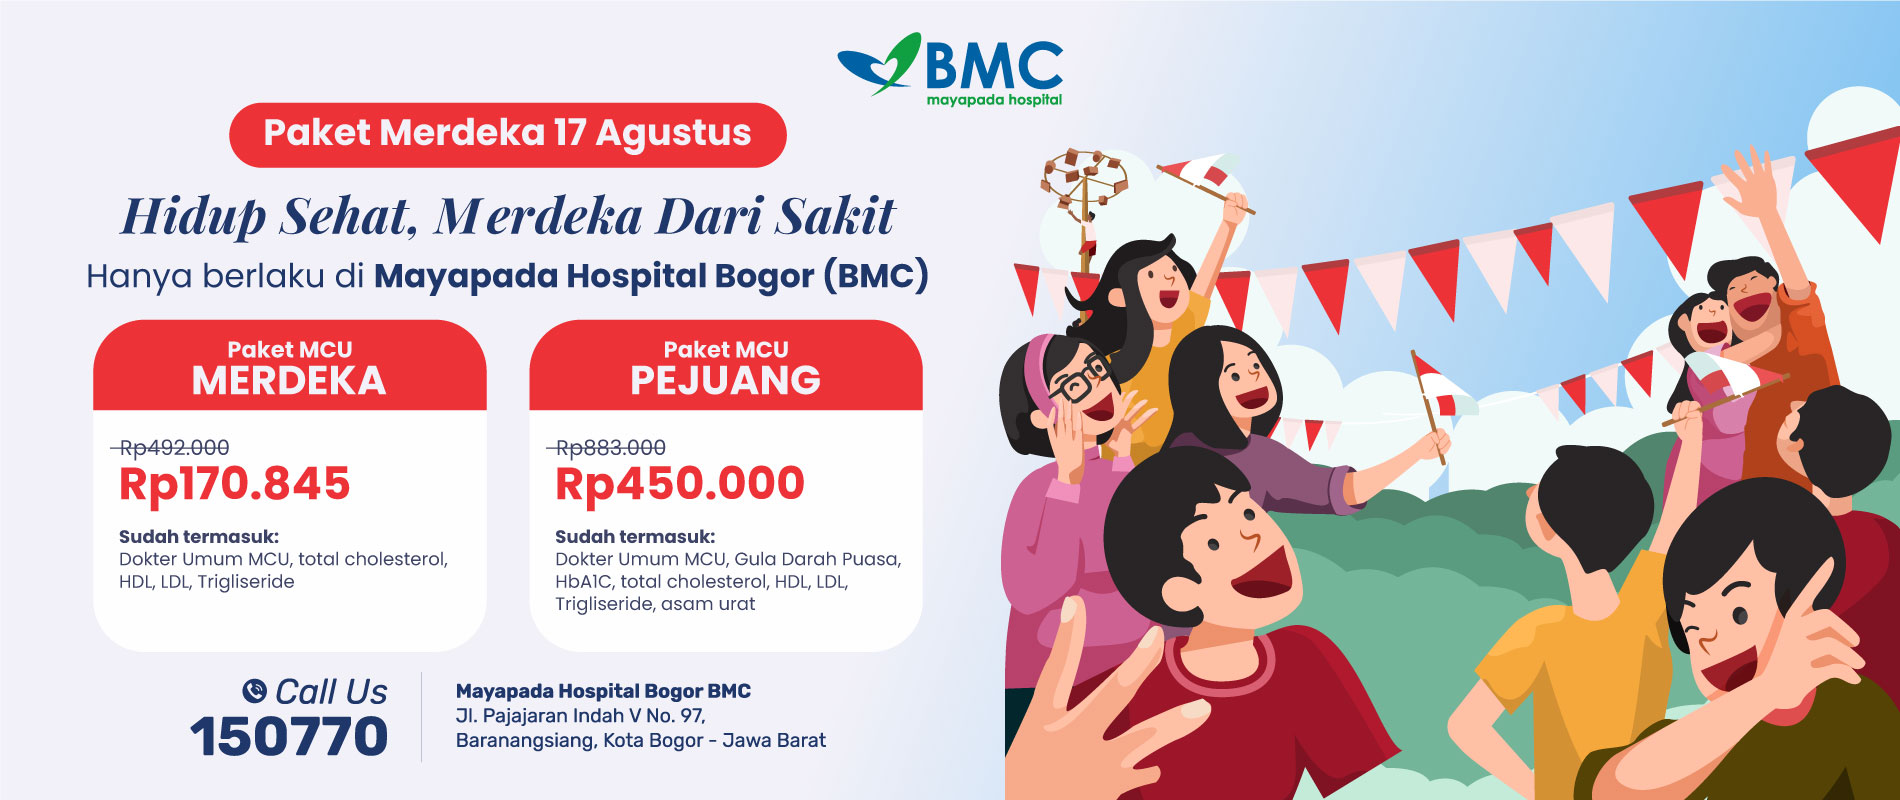 Promo MCU Paket Merdeka 17 Agustus Mayapada Hospital Bogor IMG